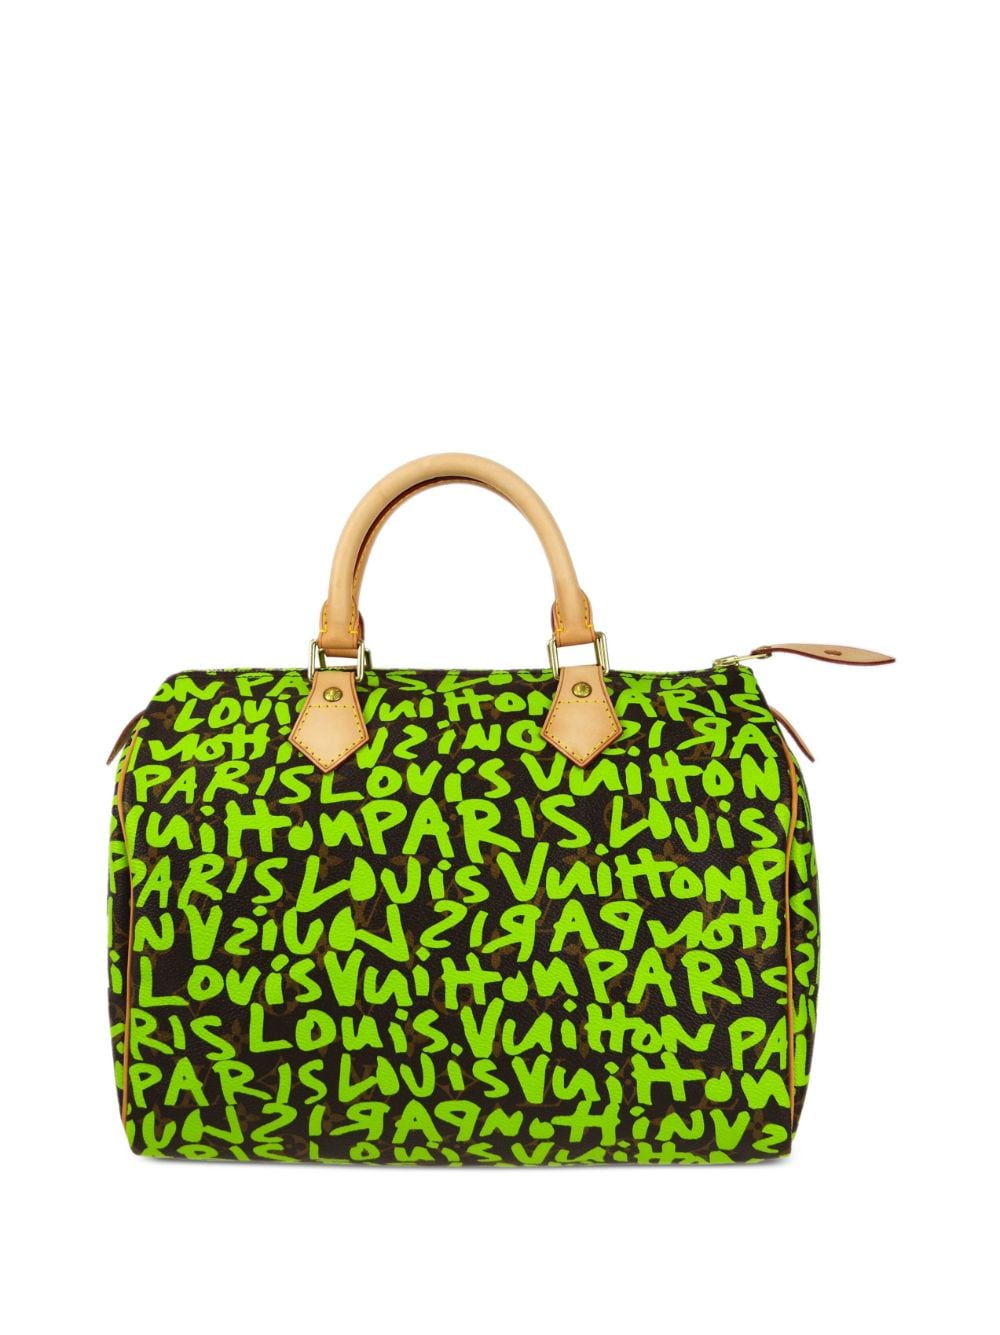 Pre-owned Louis Vuitton 2008 Monogram Graffiti Speedy 30 Handbag